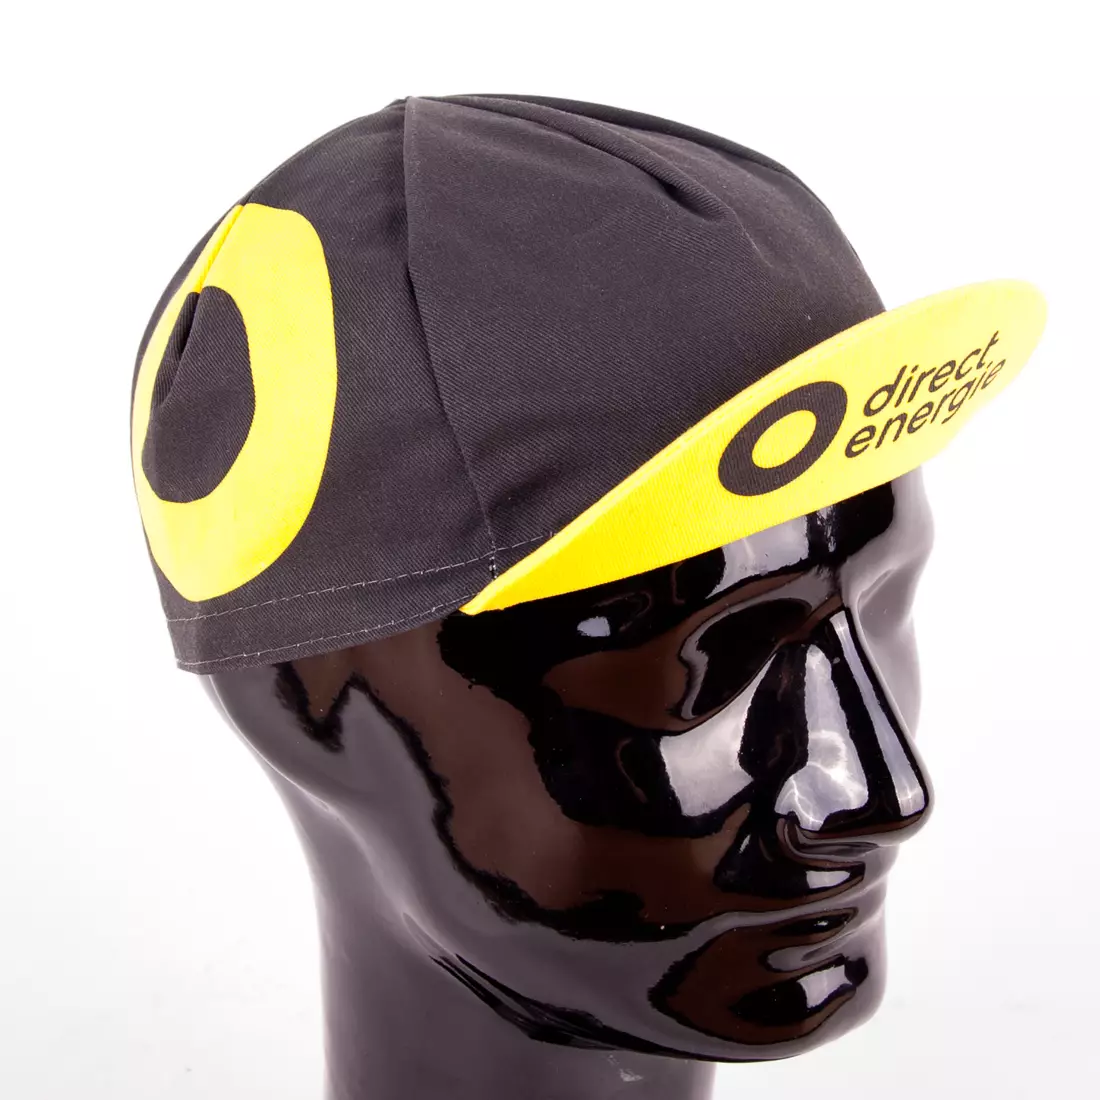 Apis Profi cycling cap Vendee direct energies black-yellow